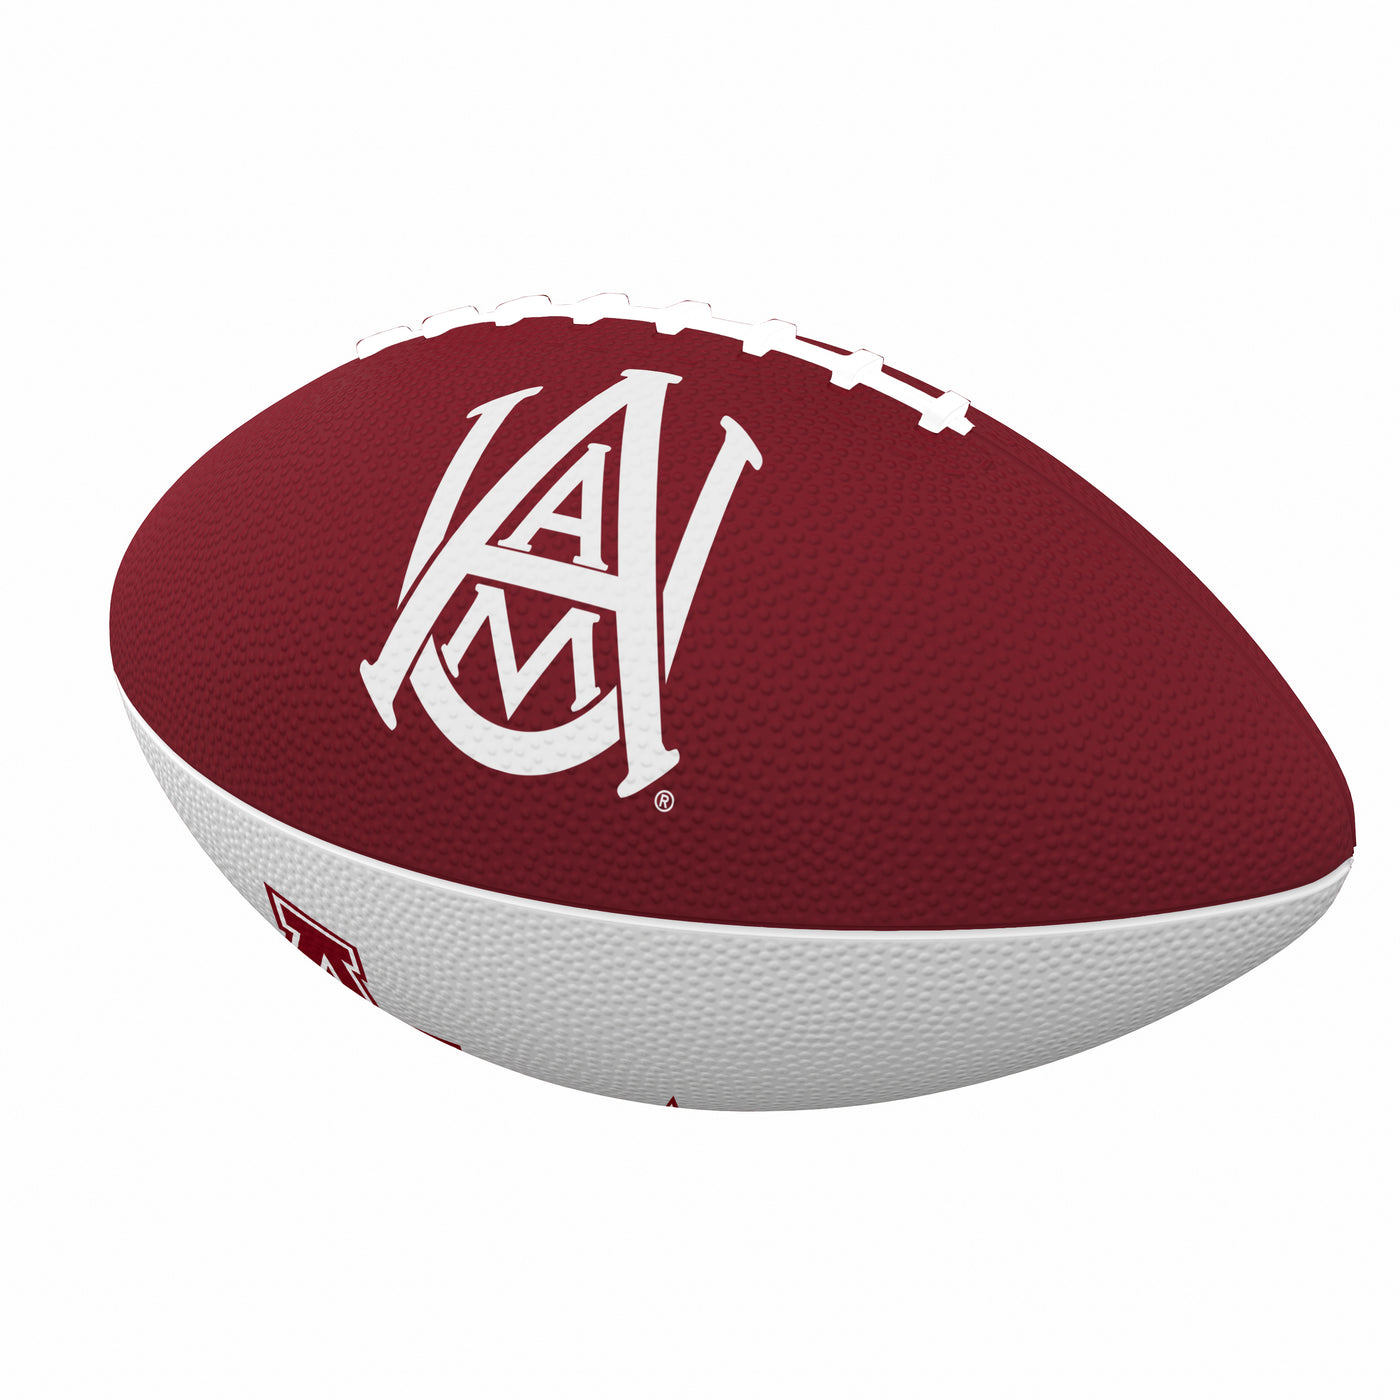 Alabama A&M Pinwheel Junior Size Rubber Football